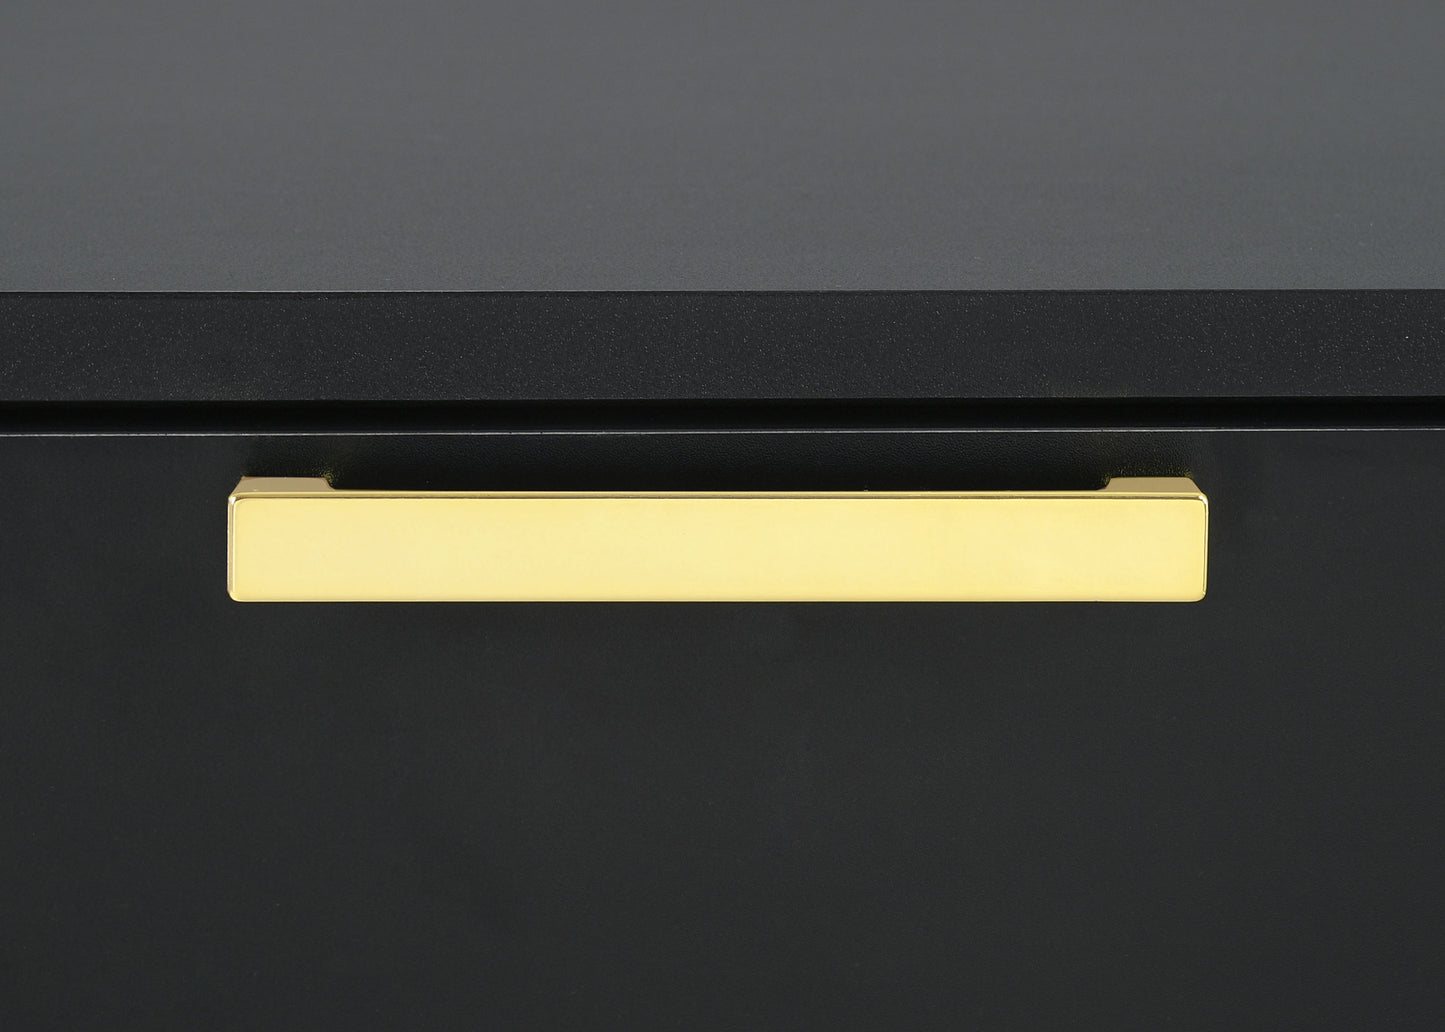 Kendall 6-drawer Dresser Black and Gold